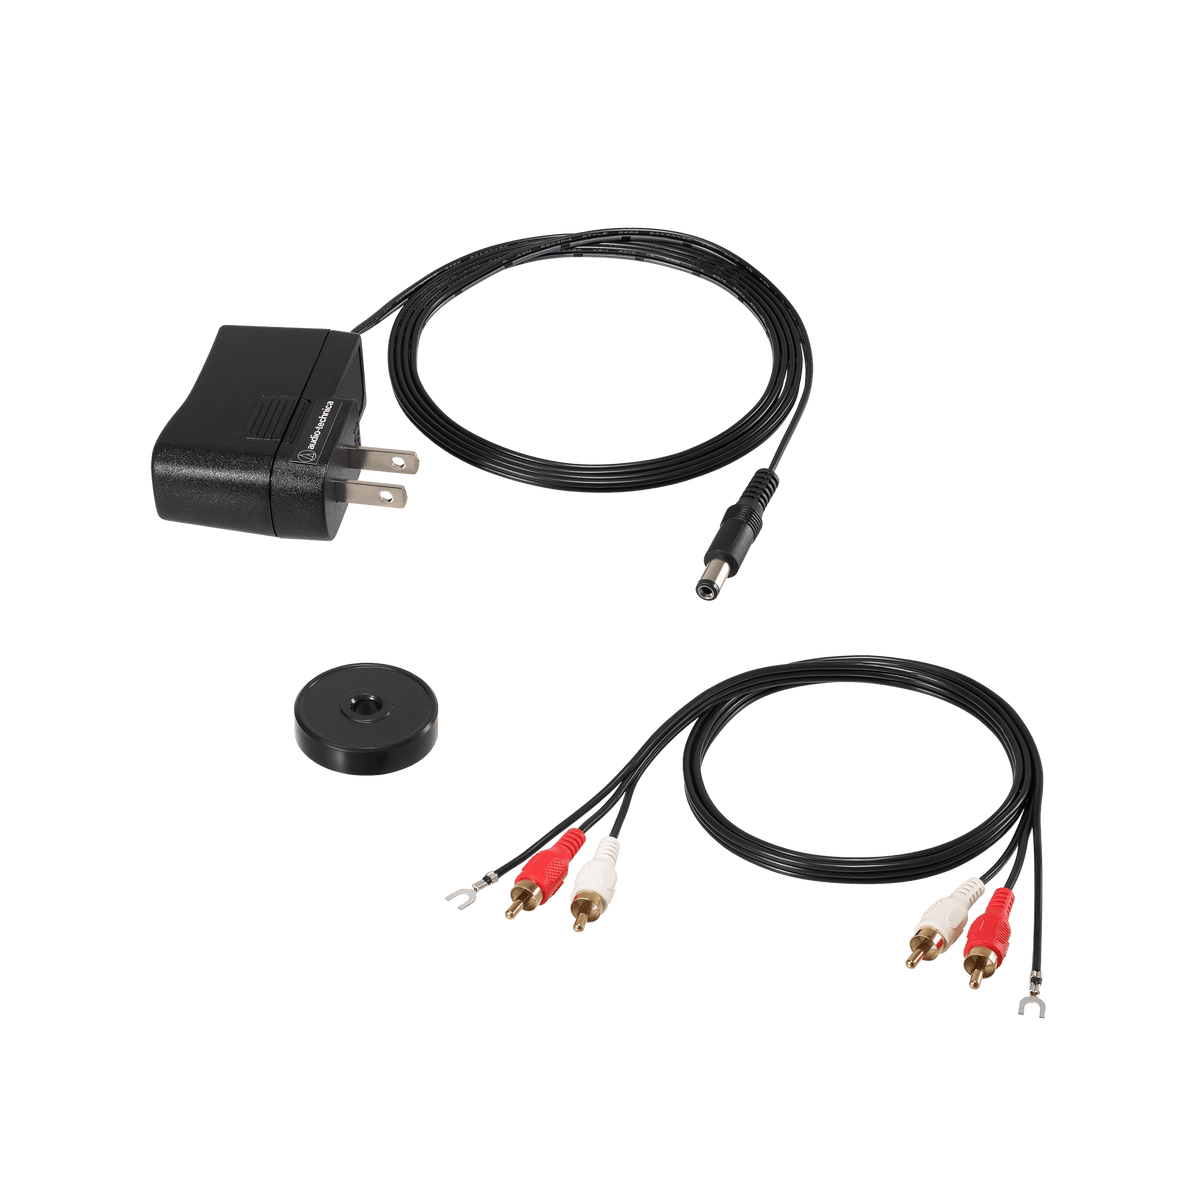 Audio Technica Fully Manual Belt-Drive Turntable - Piano Black | ATLPW50PB (7548263235772)